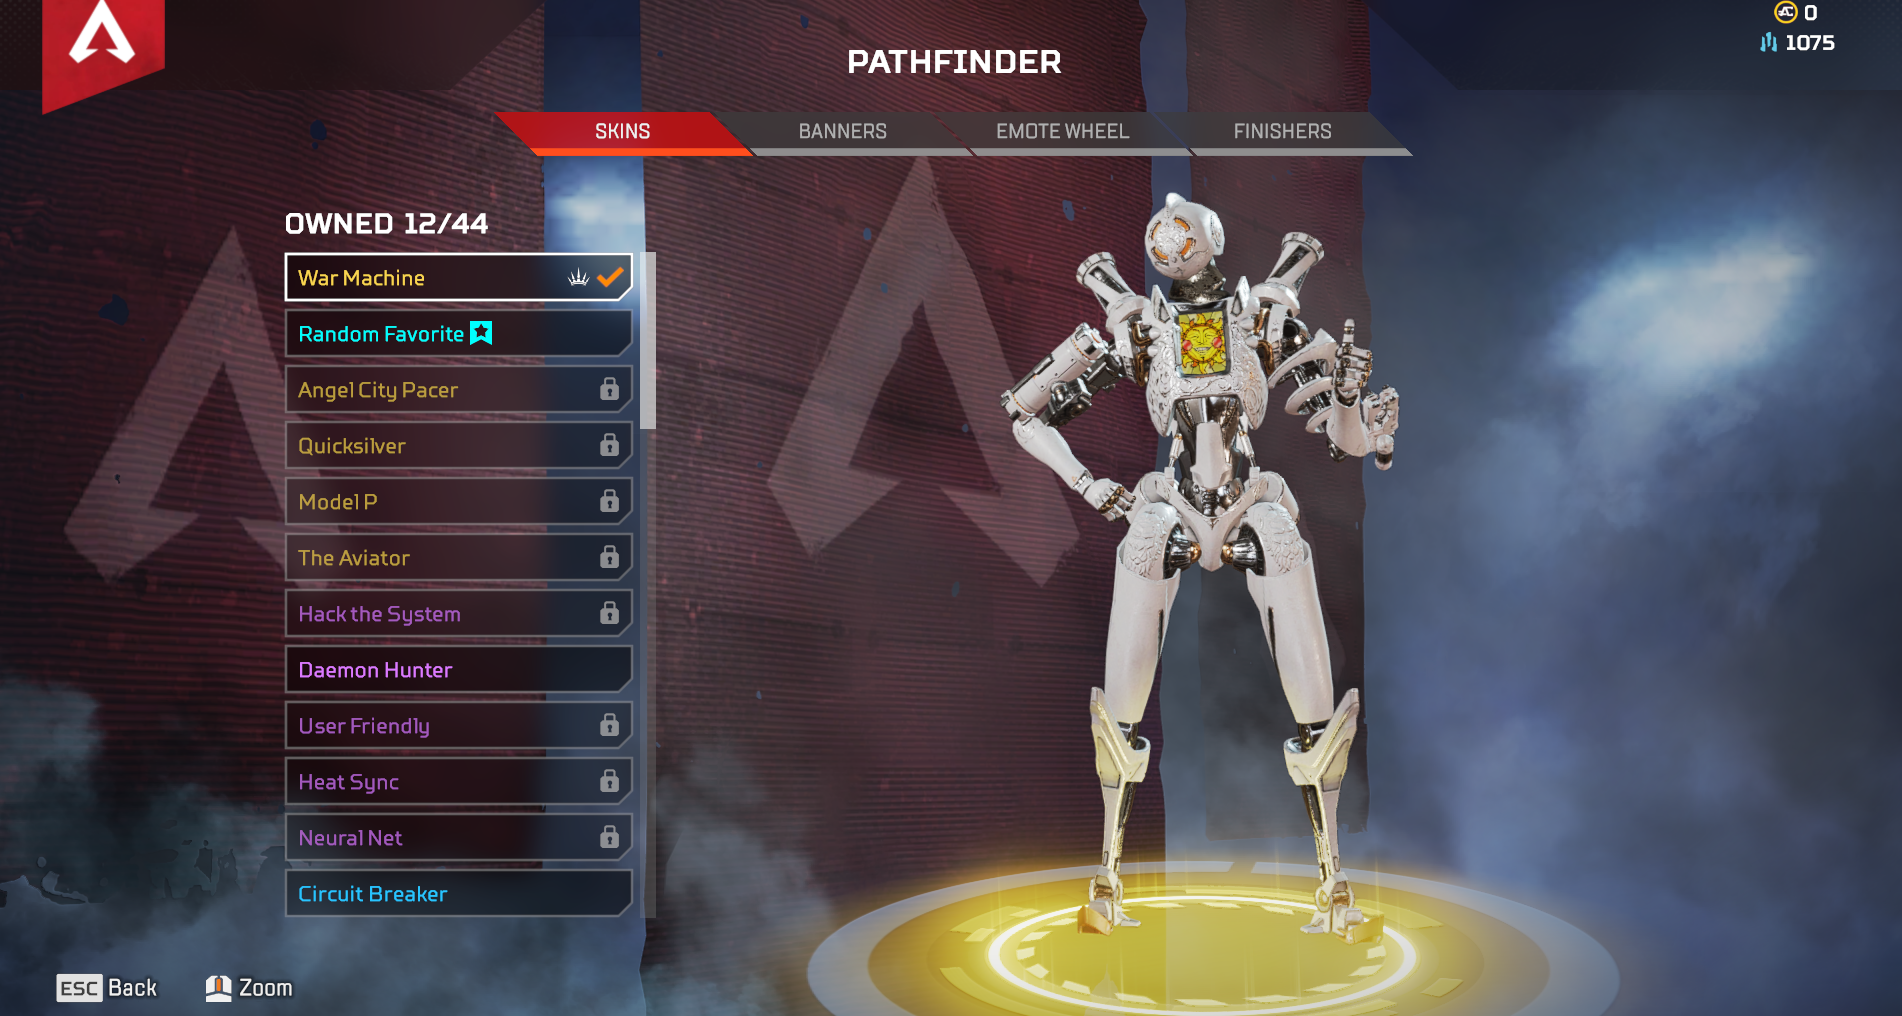 Apex Legends Account Pathfinder War Machine Main With 10k Kills And 4k Dmg Epicnpc Marketplace